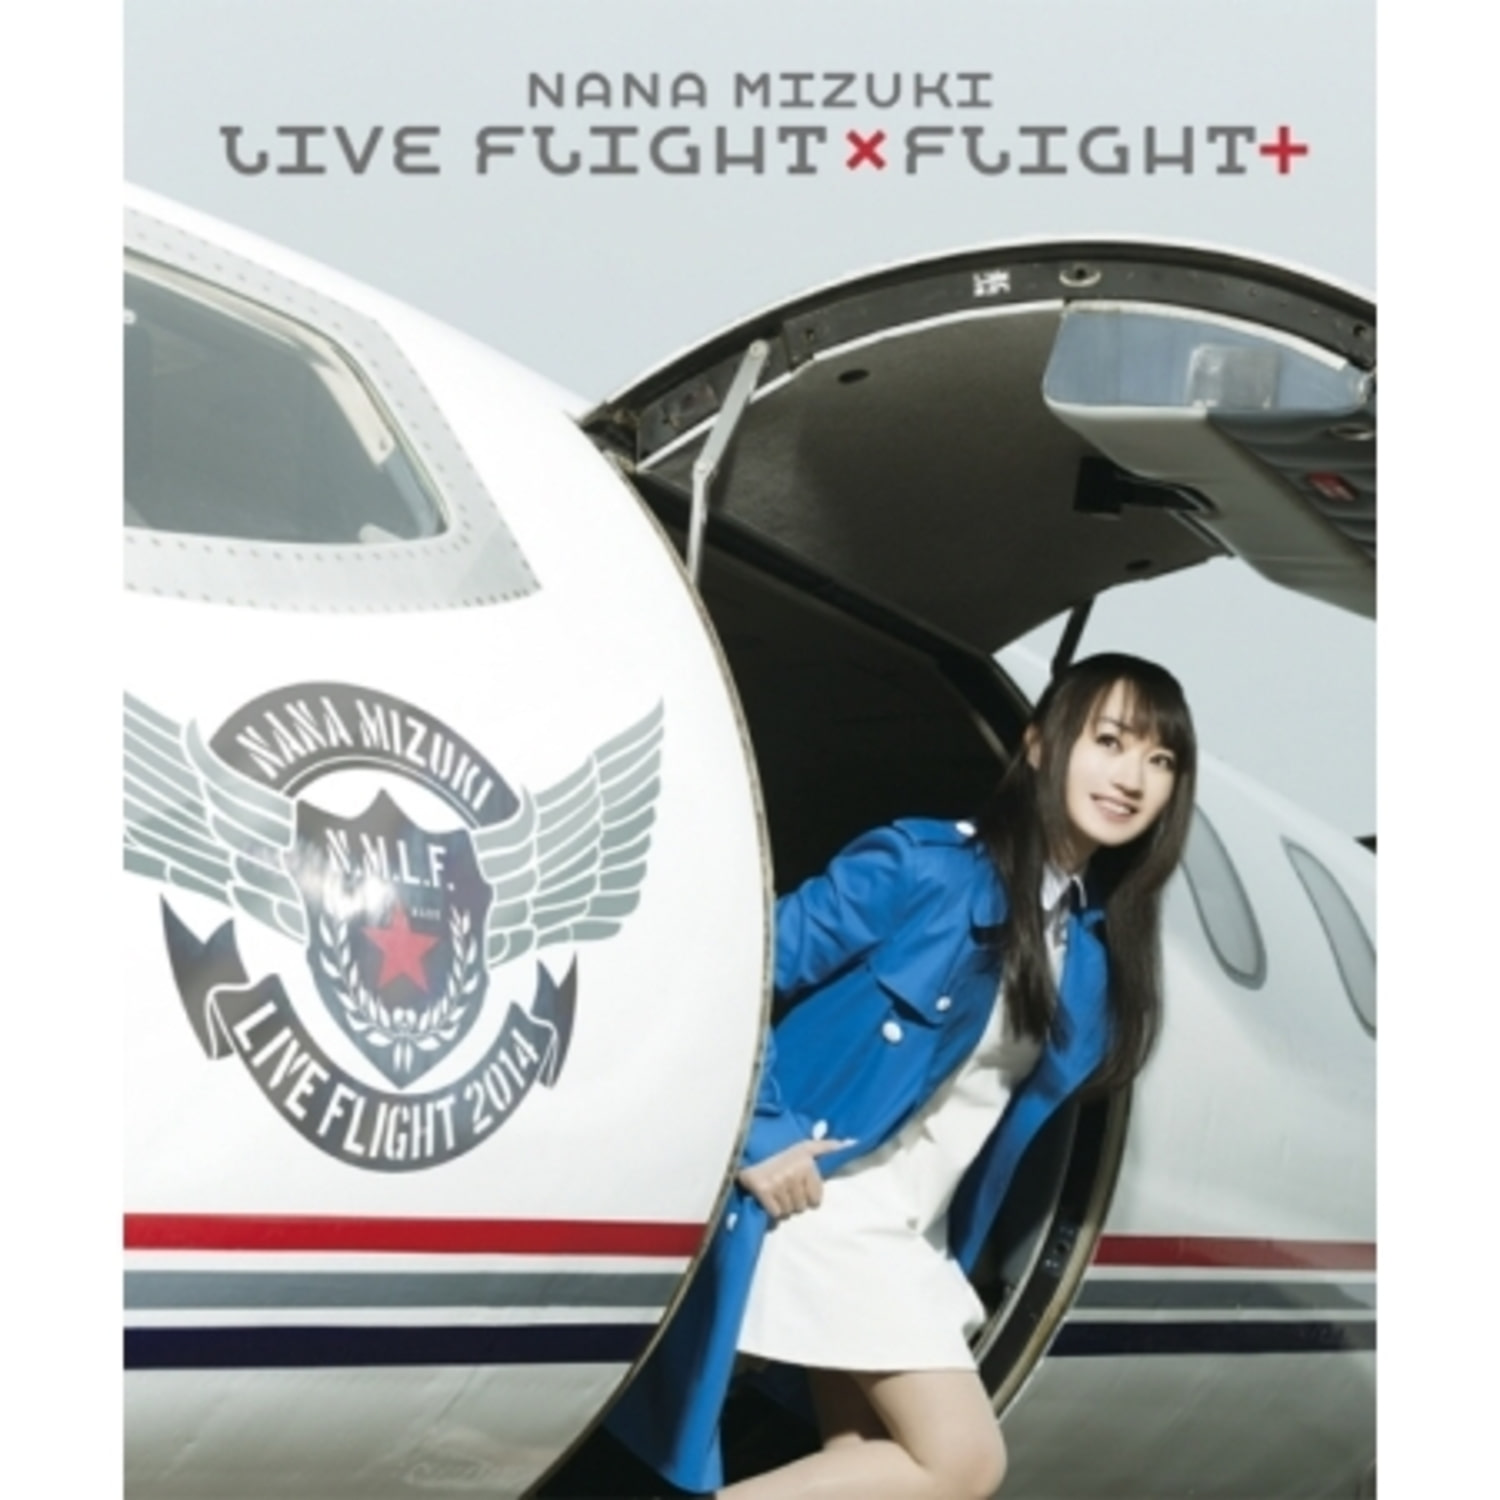 NANA MIZUKI - LIVE FLIGHT X FLIGHT + (4 DISC)